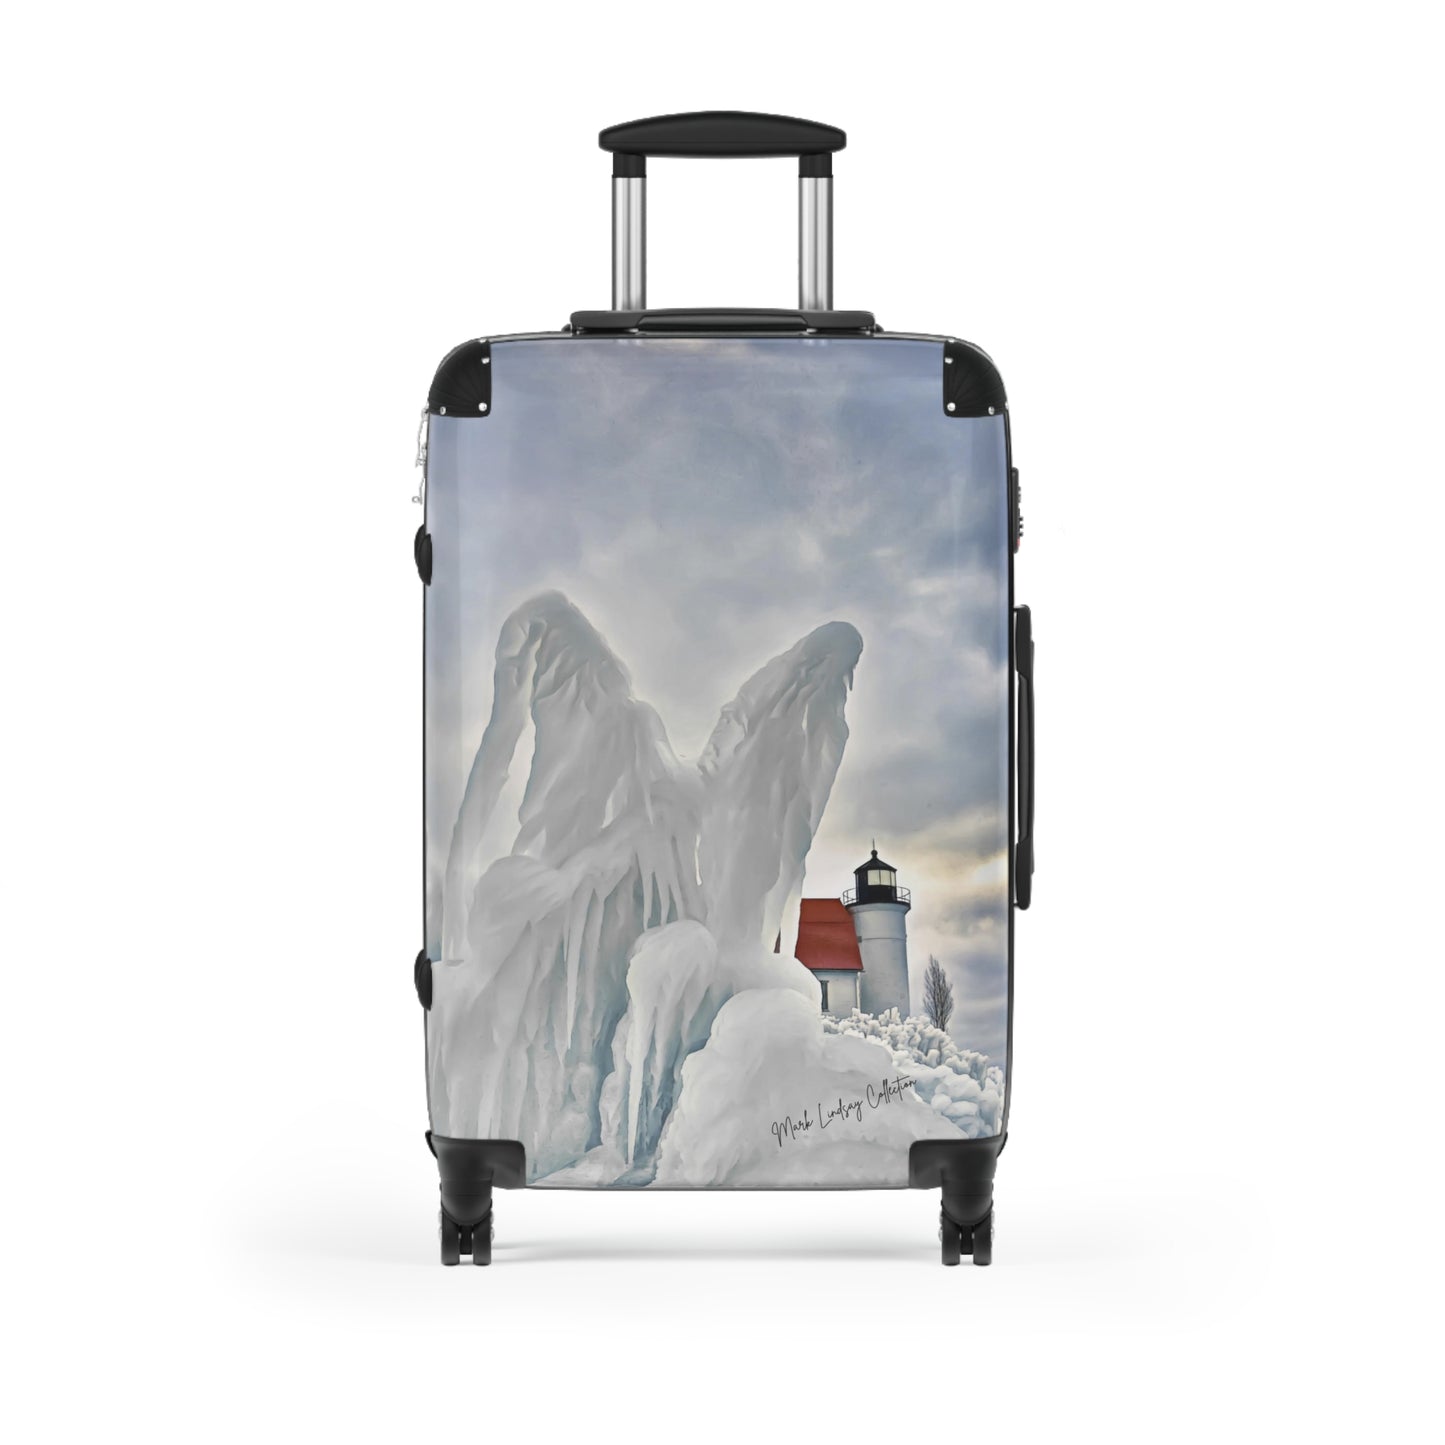 Betsie's Angel Custom Art Luggage